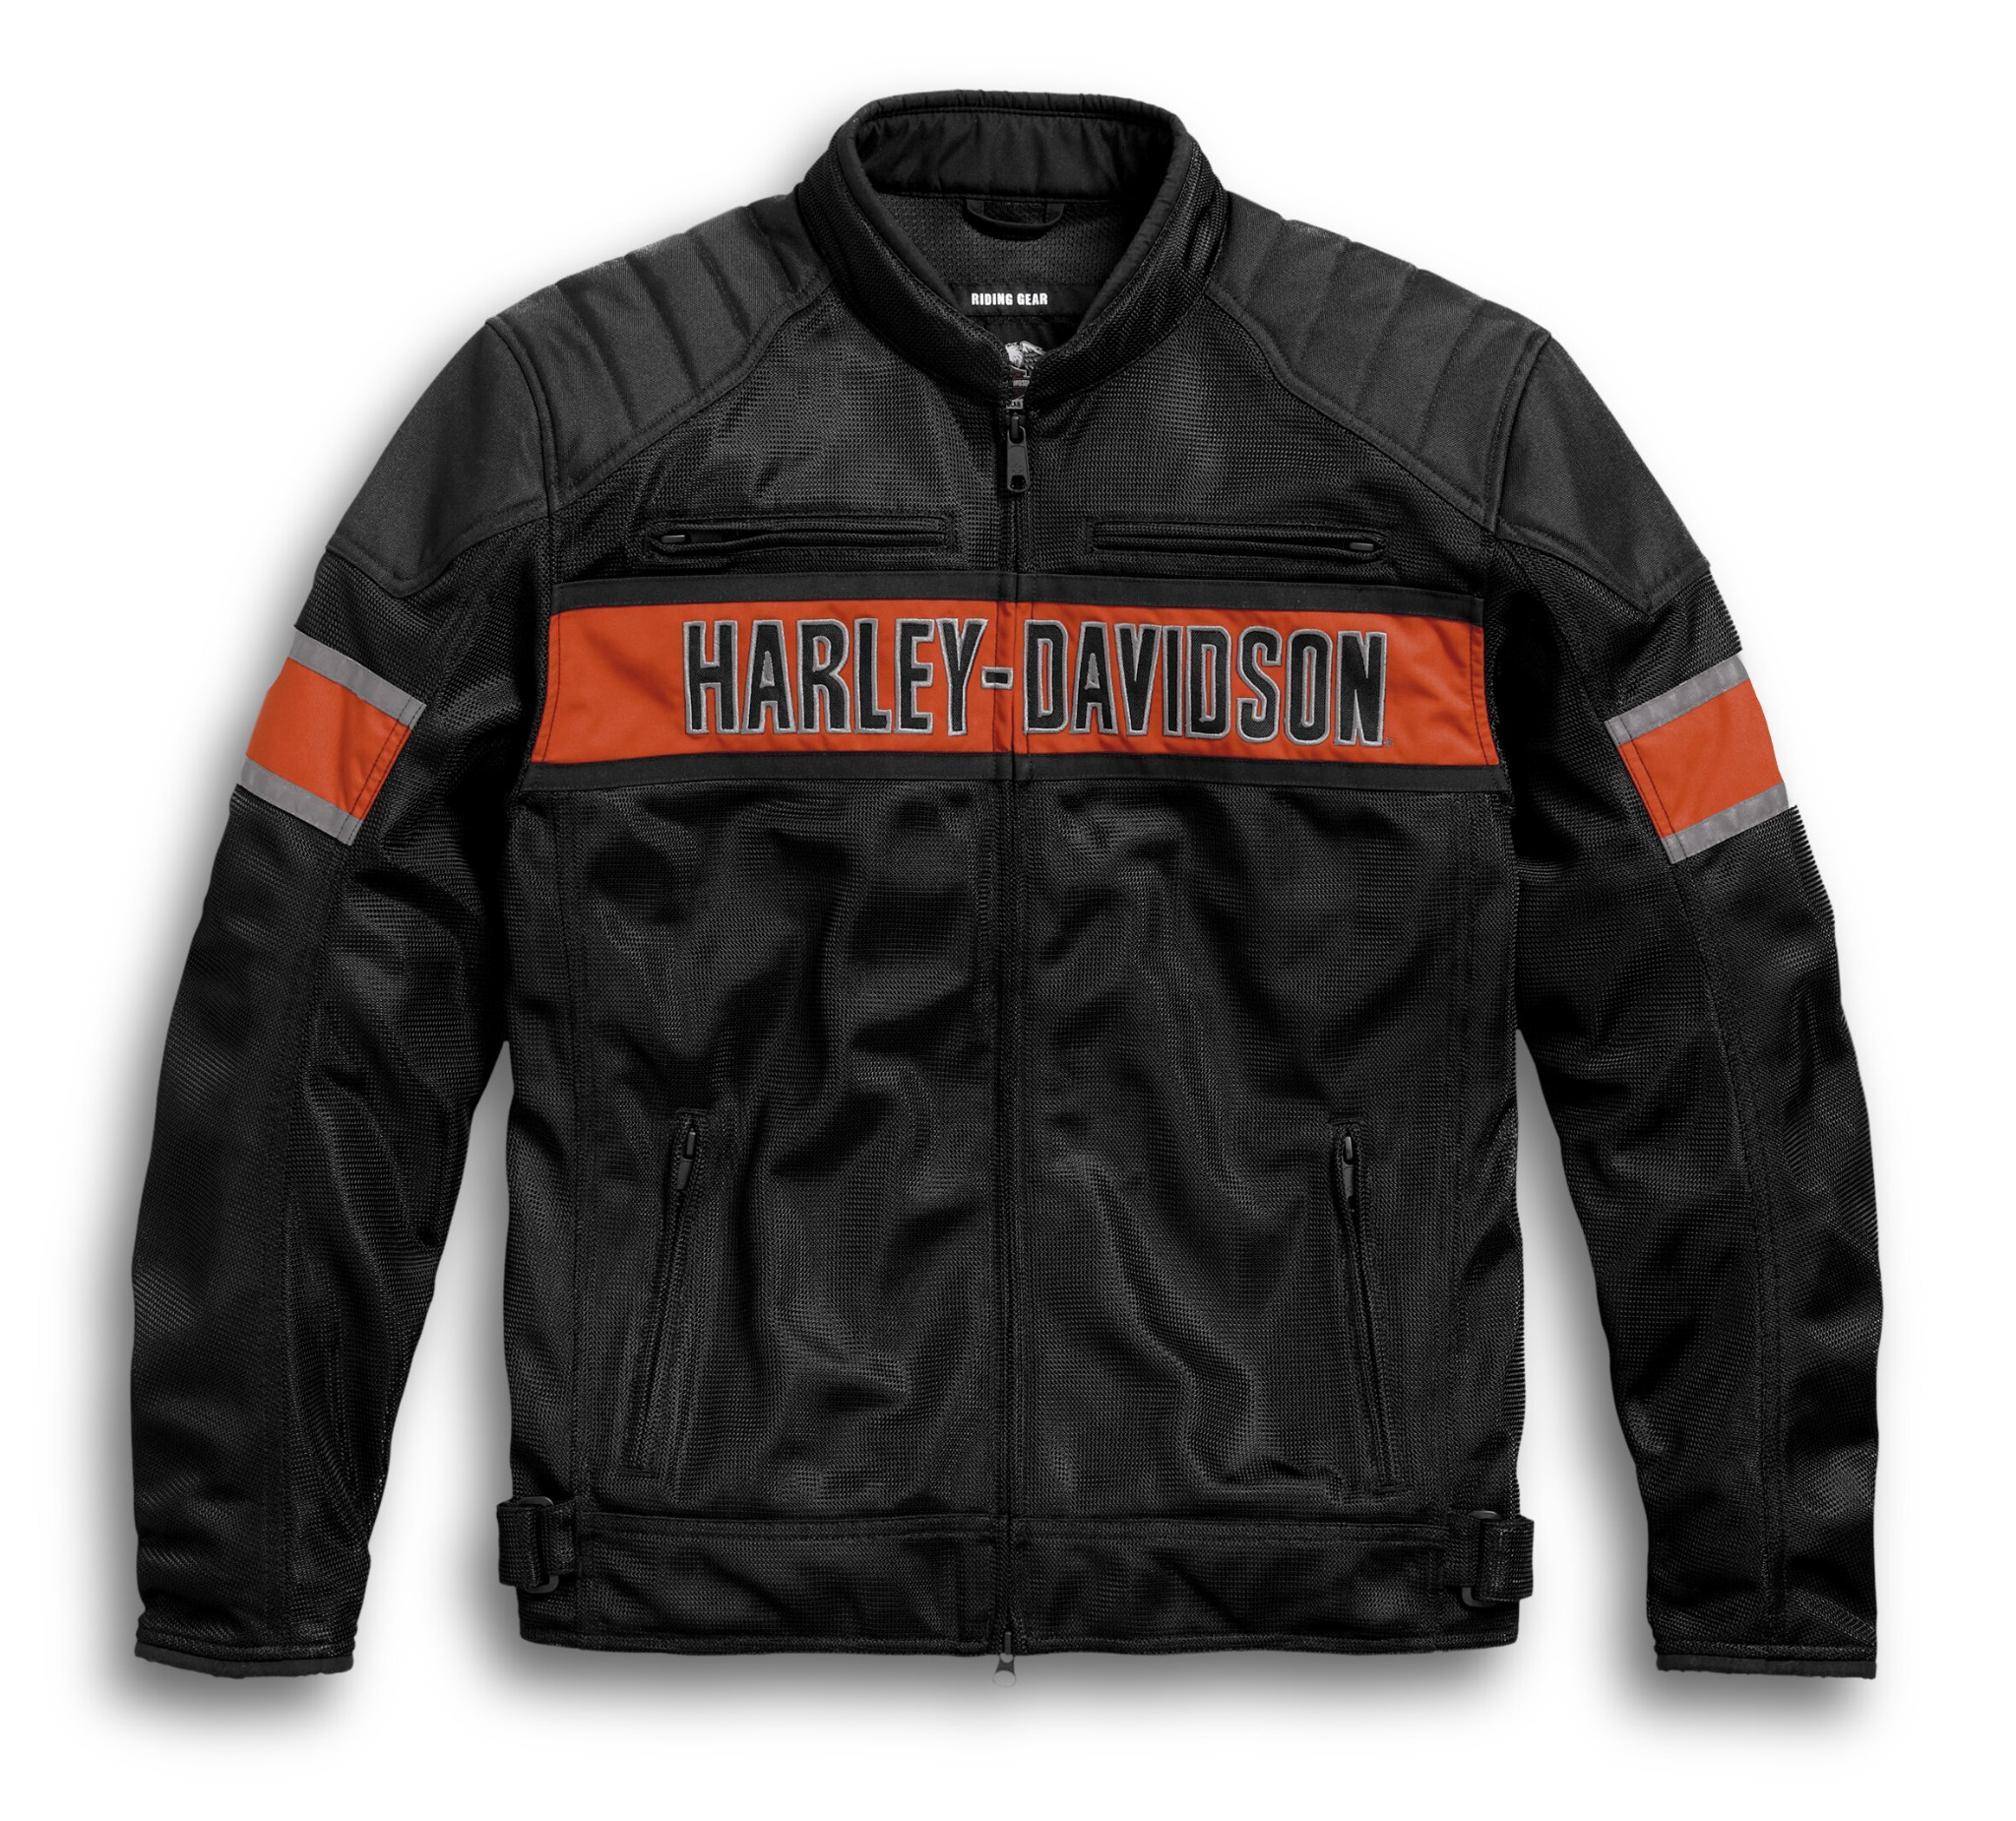 Harley Davidson Summer Riding Jacket Clearance, 50% OFF | www.eskanonlin.ir